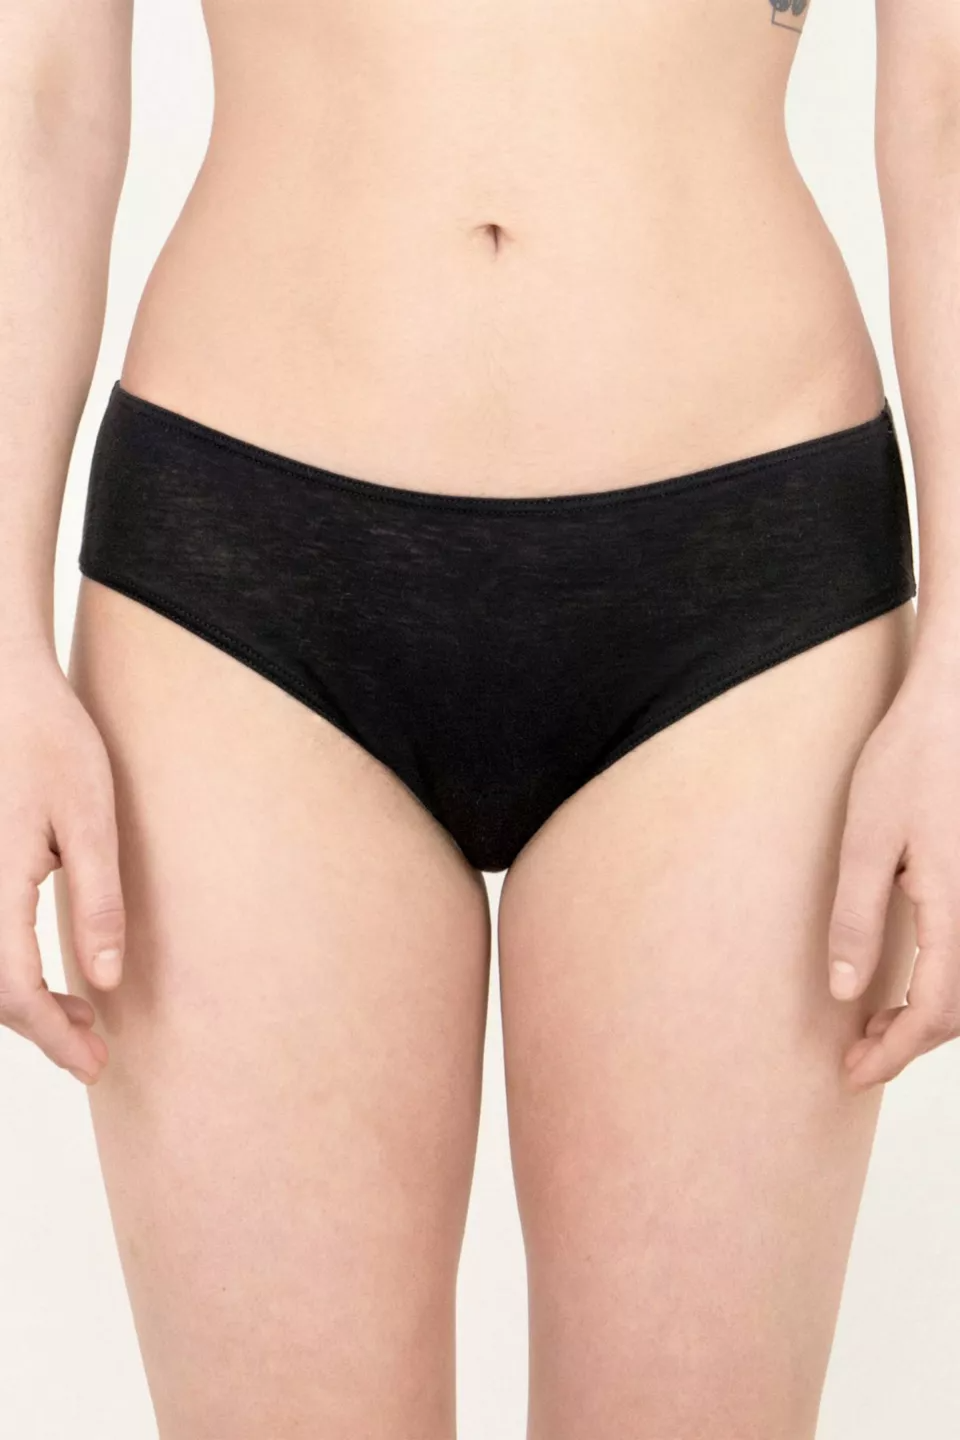 Premium Vector  Women underwear banned here vector icon no panty